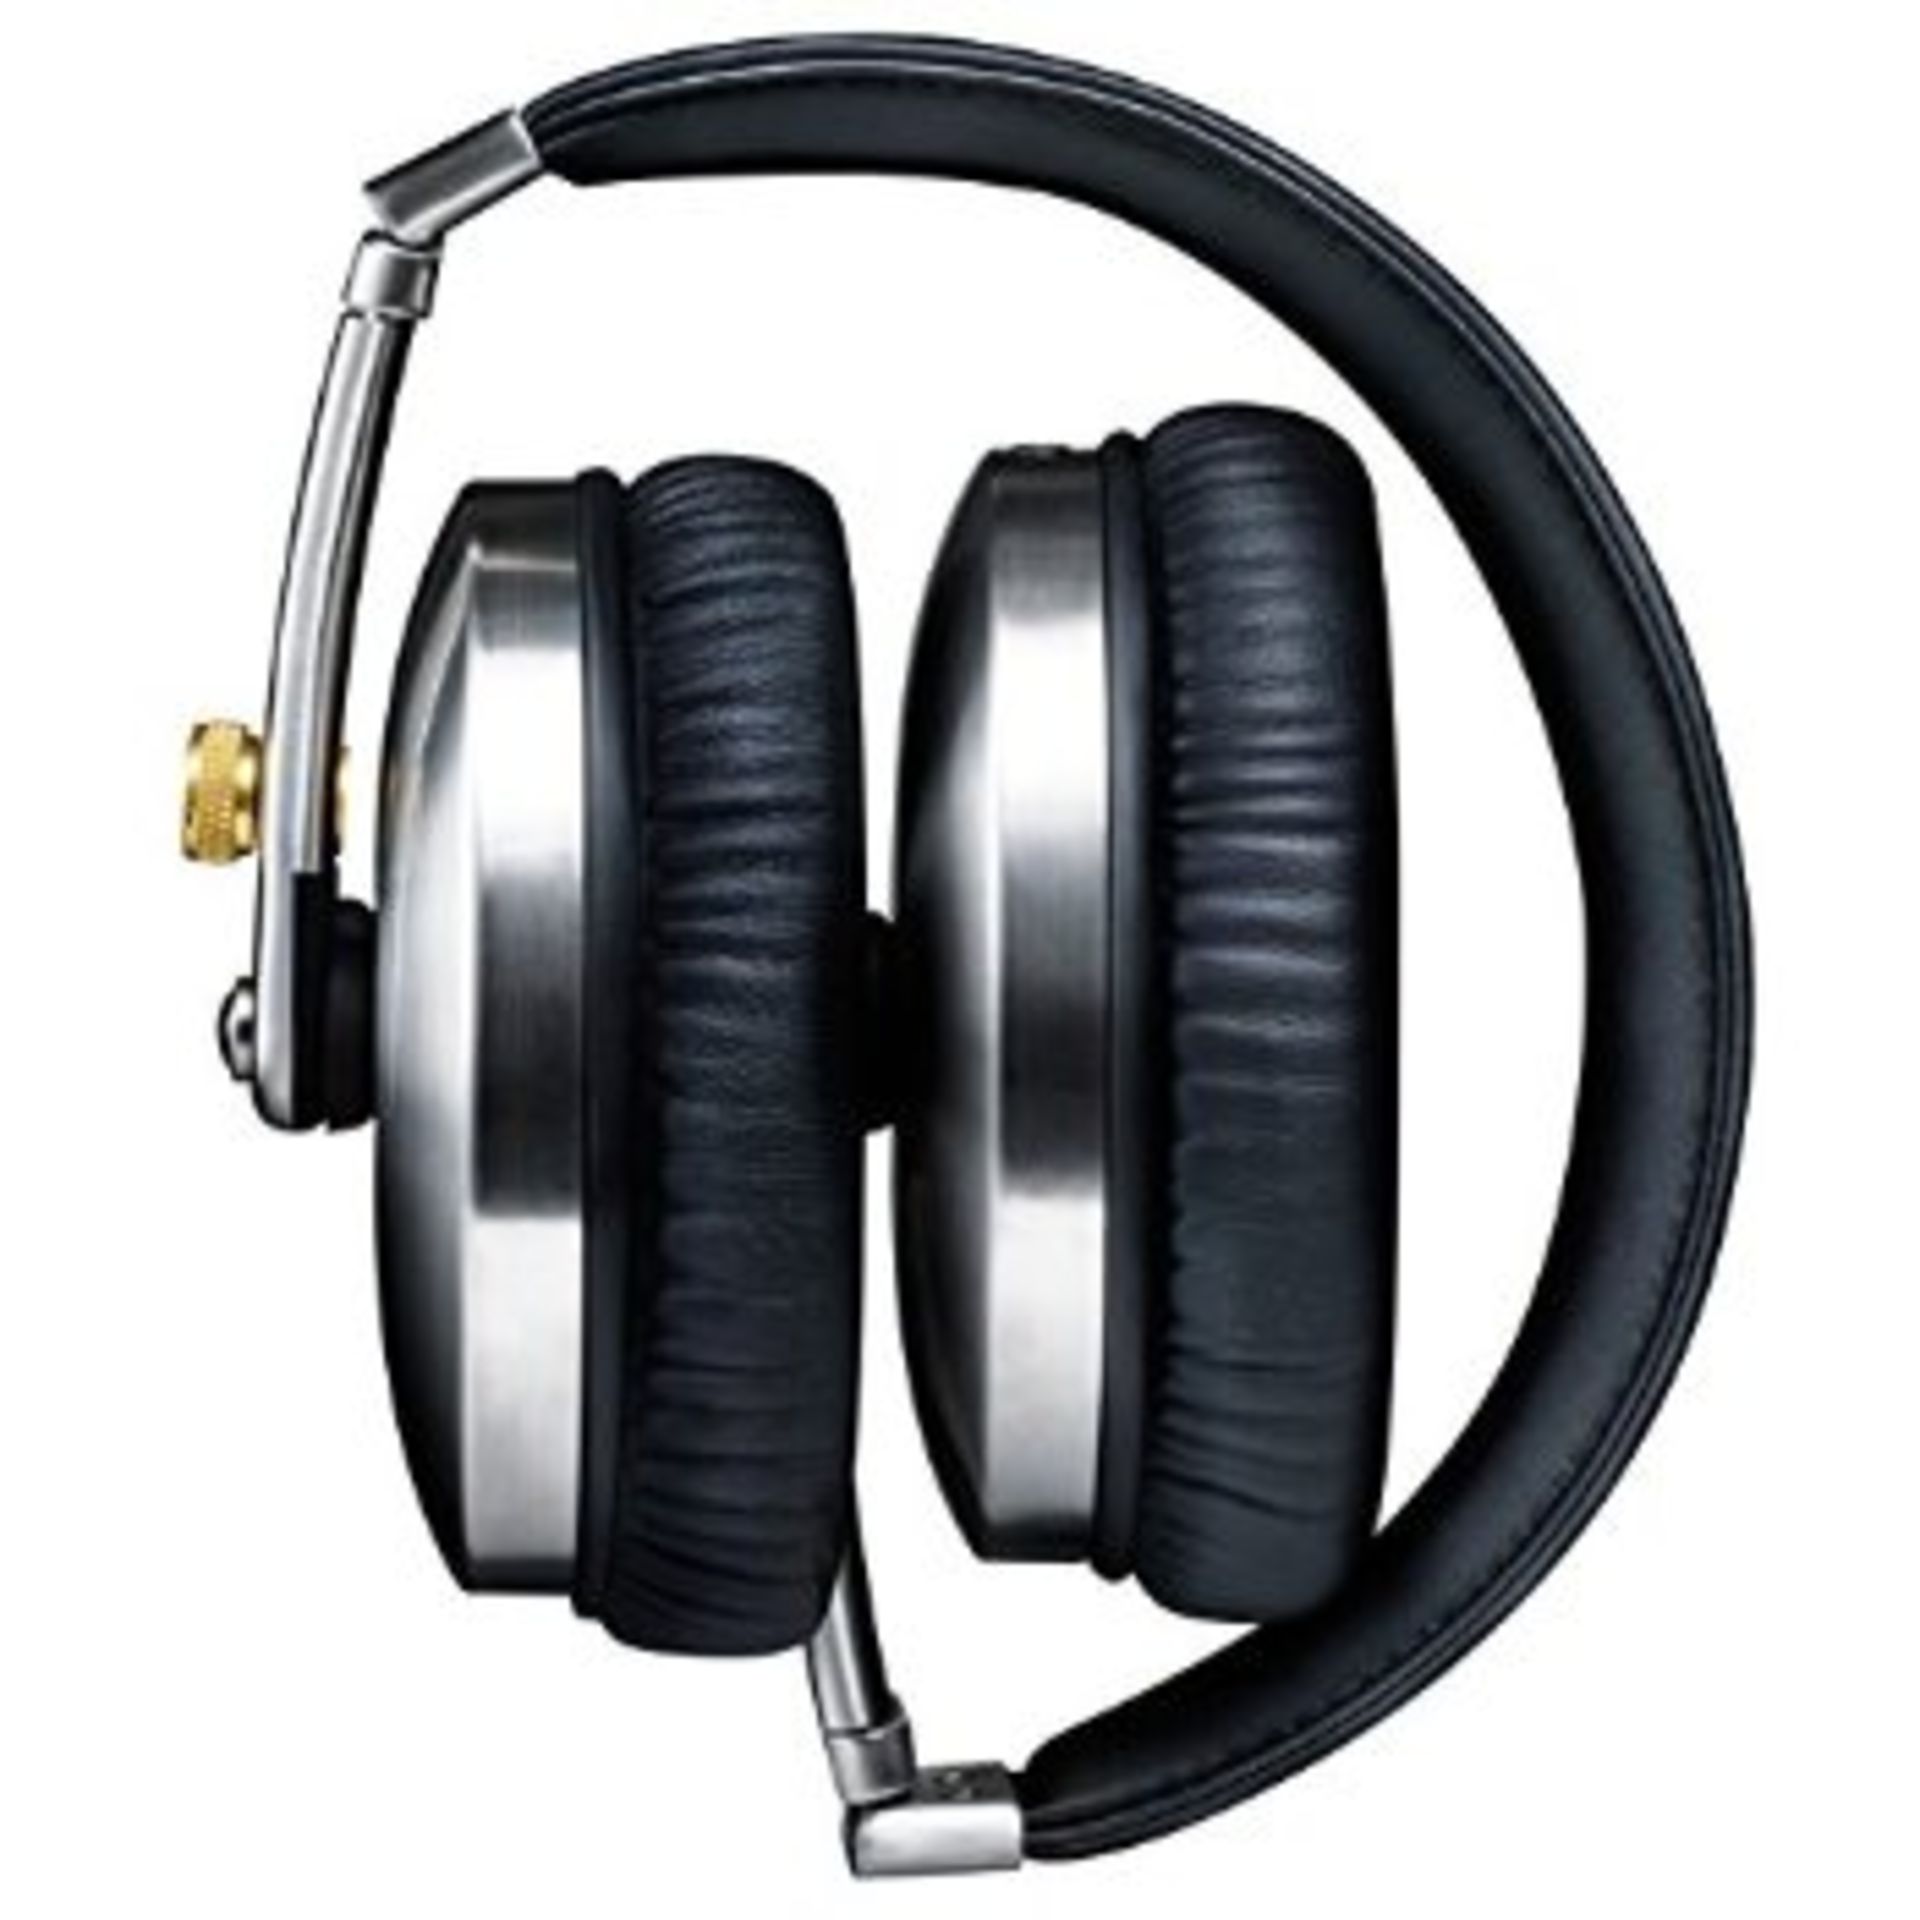 V *TRADE QTY* Brand New Ted Baker Rockall High Performance Folding Over Ear Headphones Black/ - Image 2 of 2